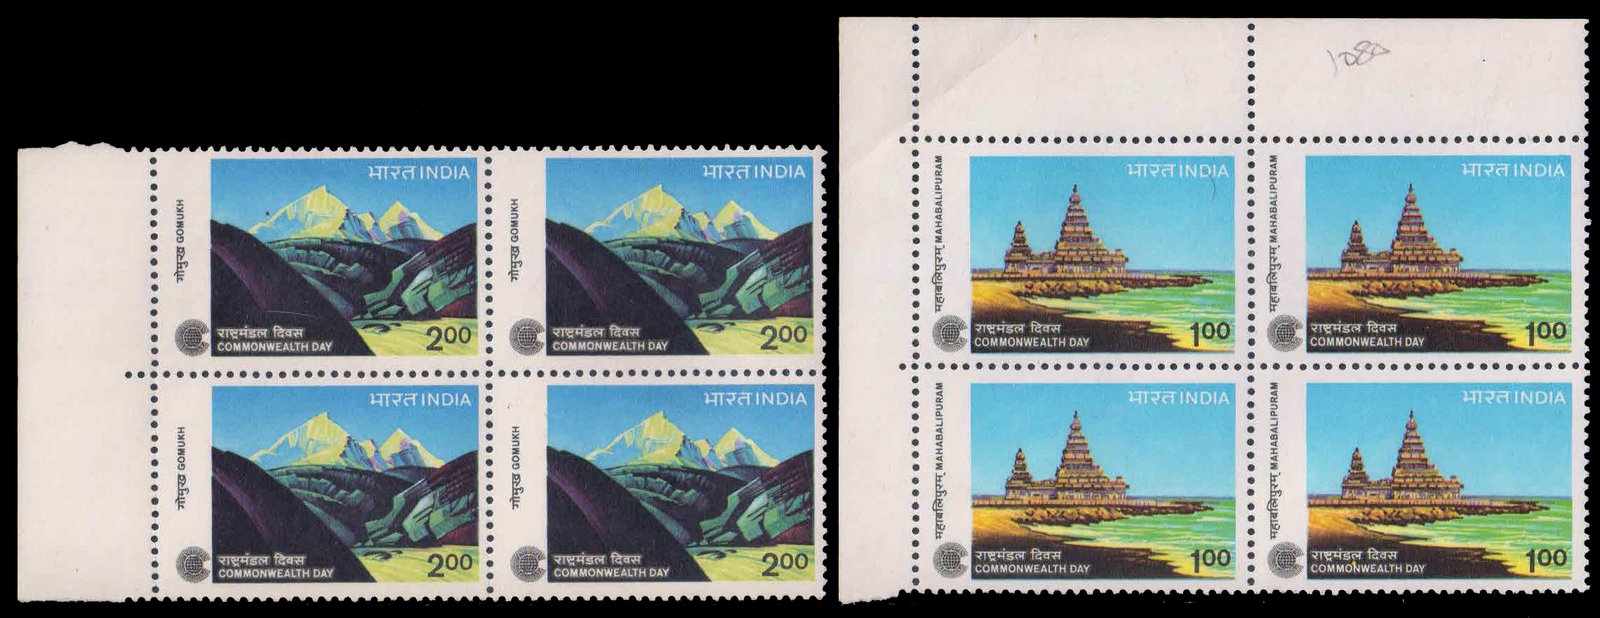 INDIA 1983-Commonwealth Day, Shore Temple Mahabalipuram, Gomukh of Gangotri Glacier, Set of 2 Blocks, S.G. 1080-81